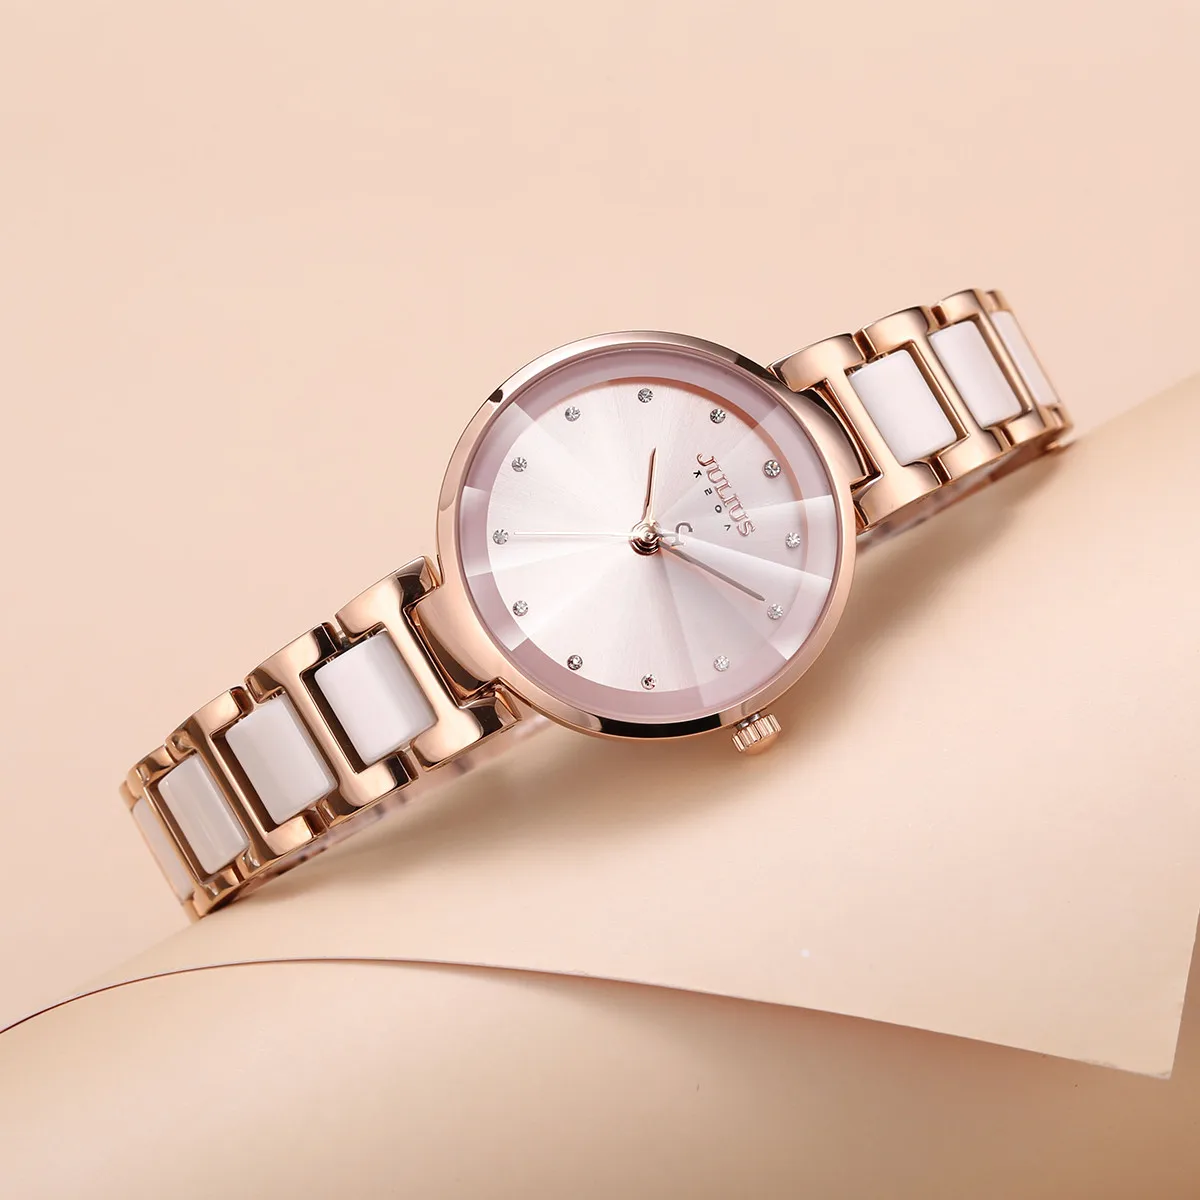 

New Ceramic Julius Women's Watch Japan Mov't Hours Elegant Cutting Fashion Rhinestones Clock Metal Bracelet Girl's Gift Box